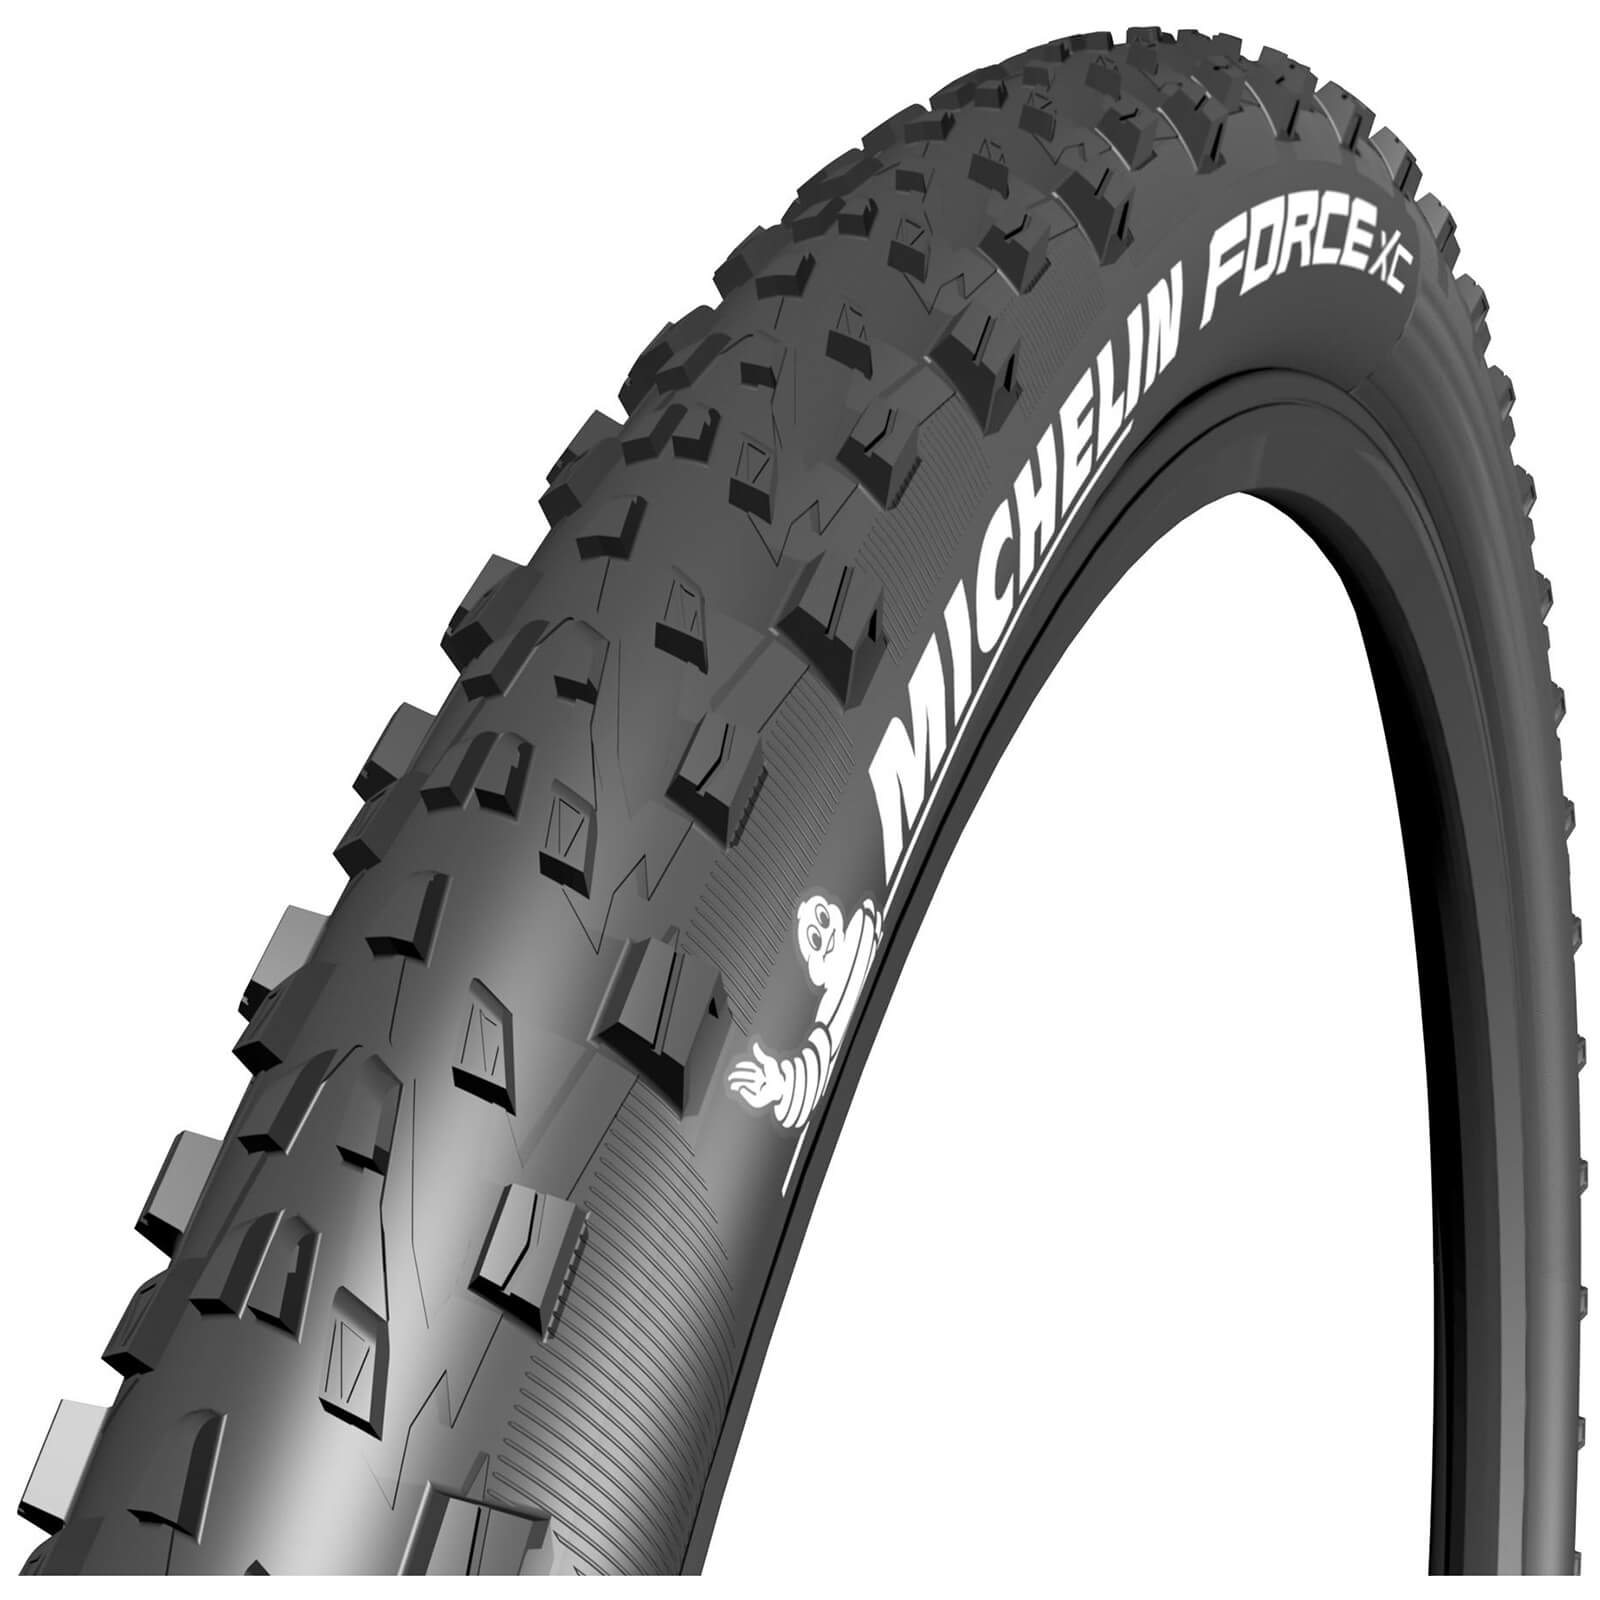 Michelin Force XC Performance Line MTB Tyre - 27.5x2.25